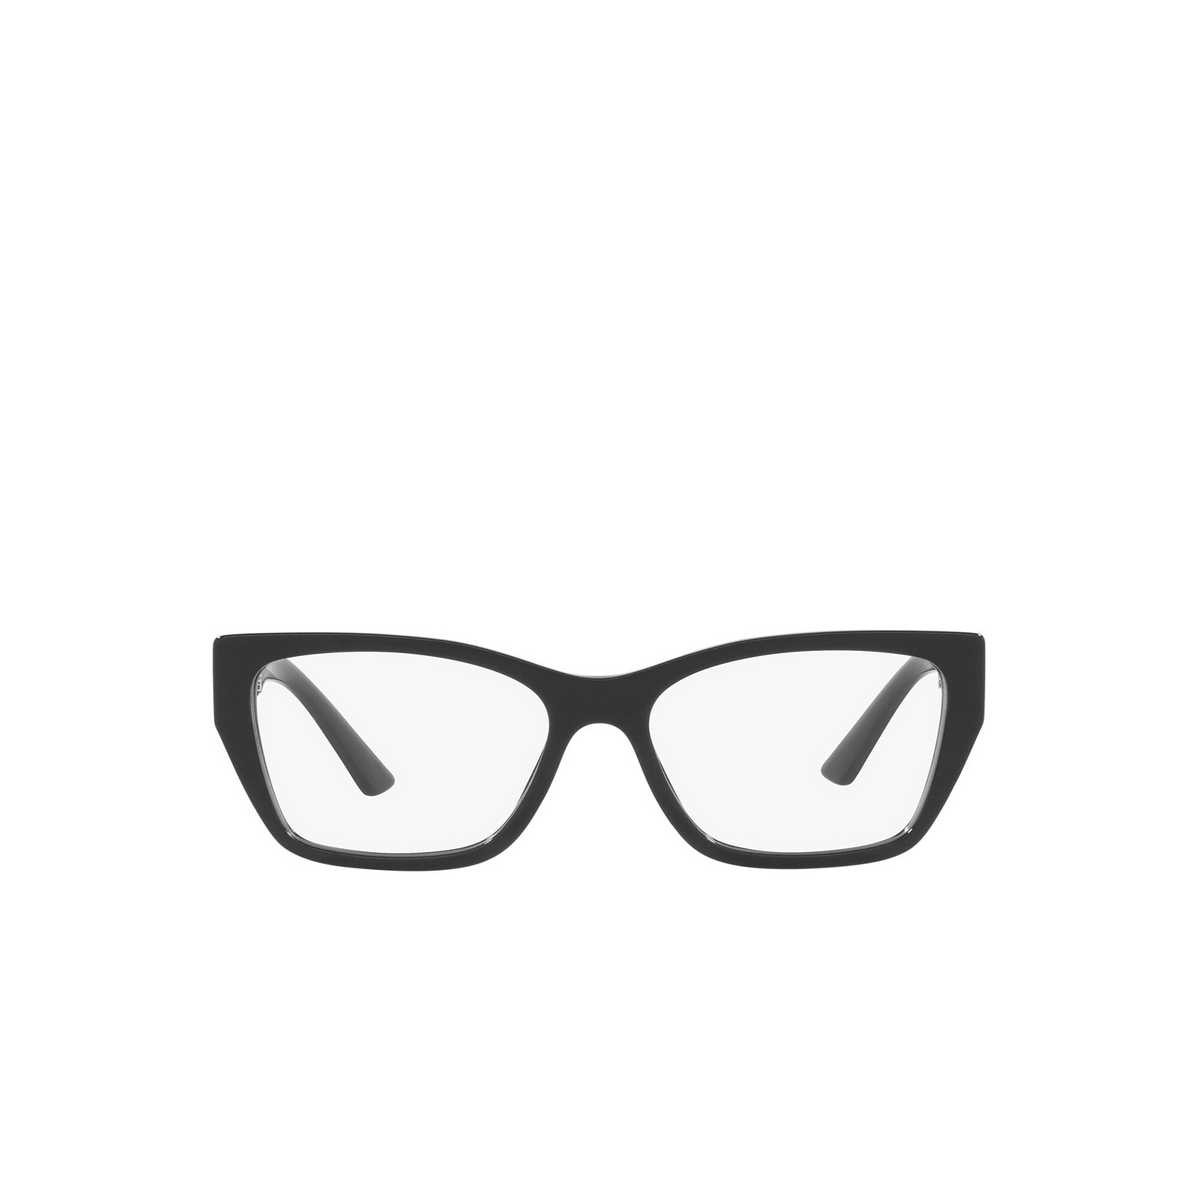 Prada® Square Eyeglasses: PR 11YV color Black 1AB1O1 - front view.